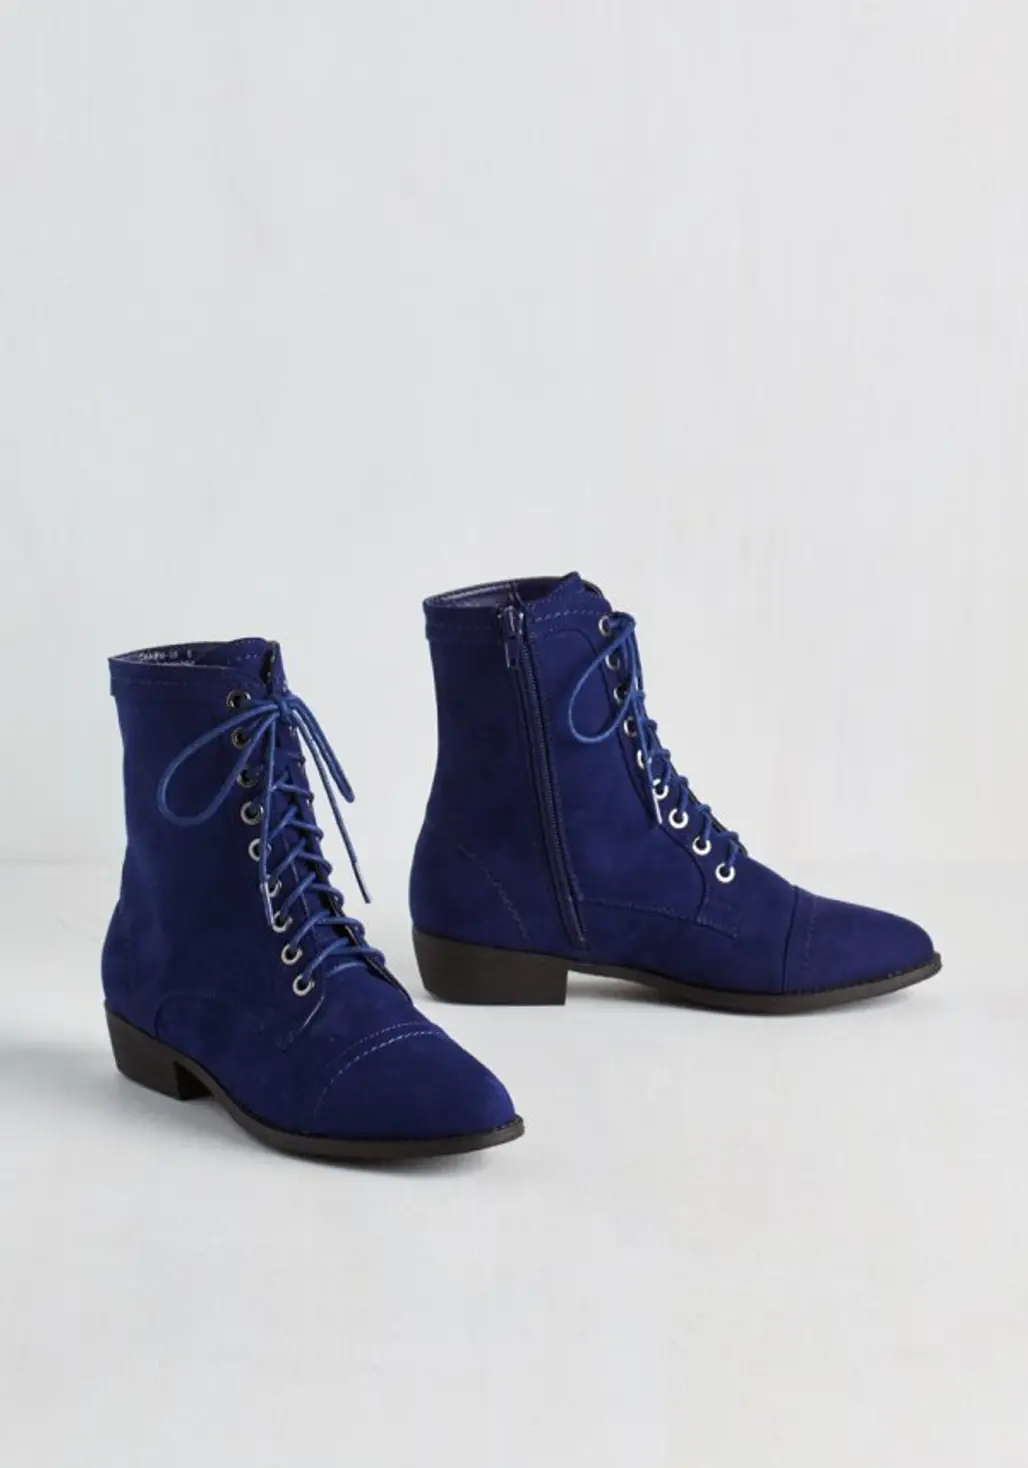 I Want Blue Boots Too!